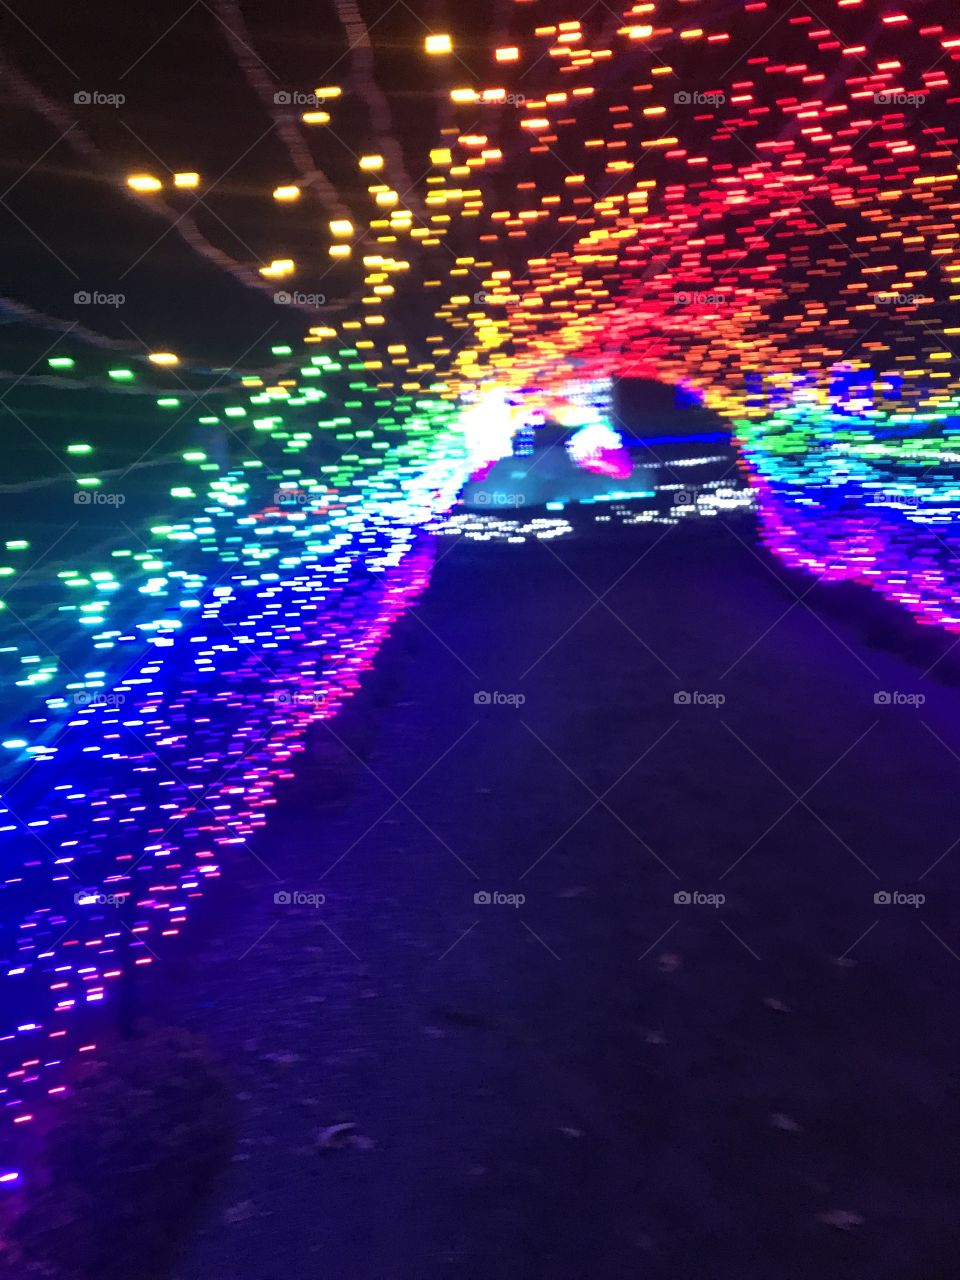 The rainbow connection 